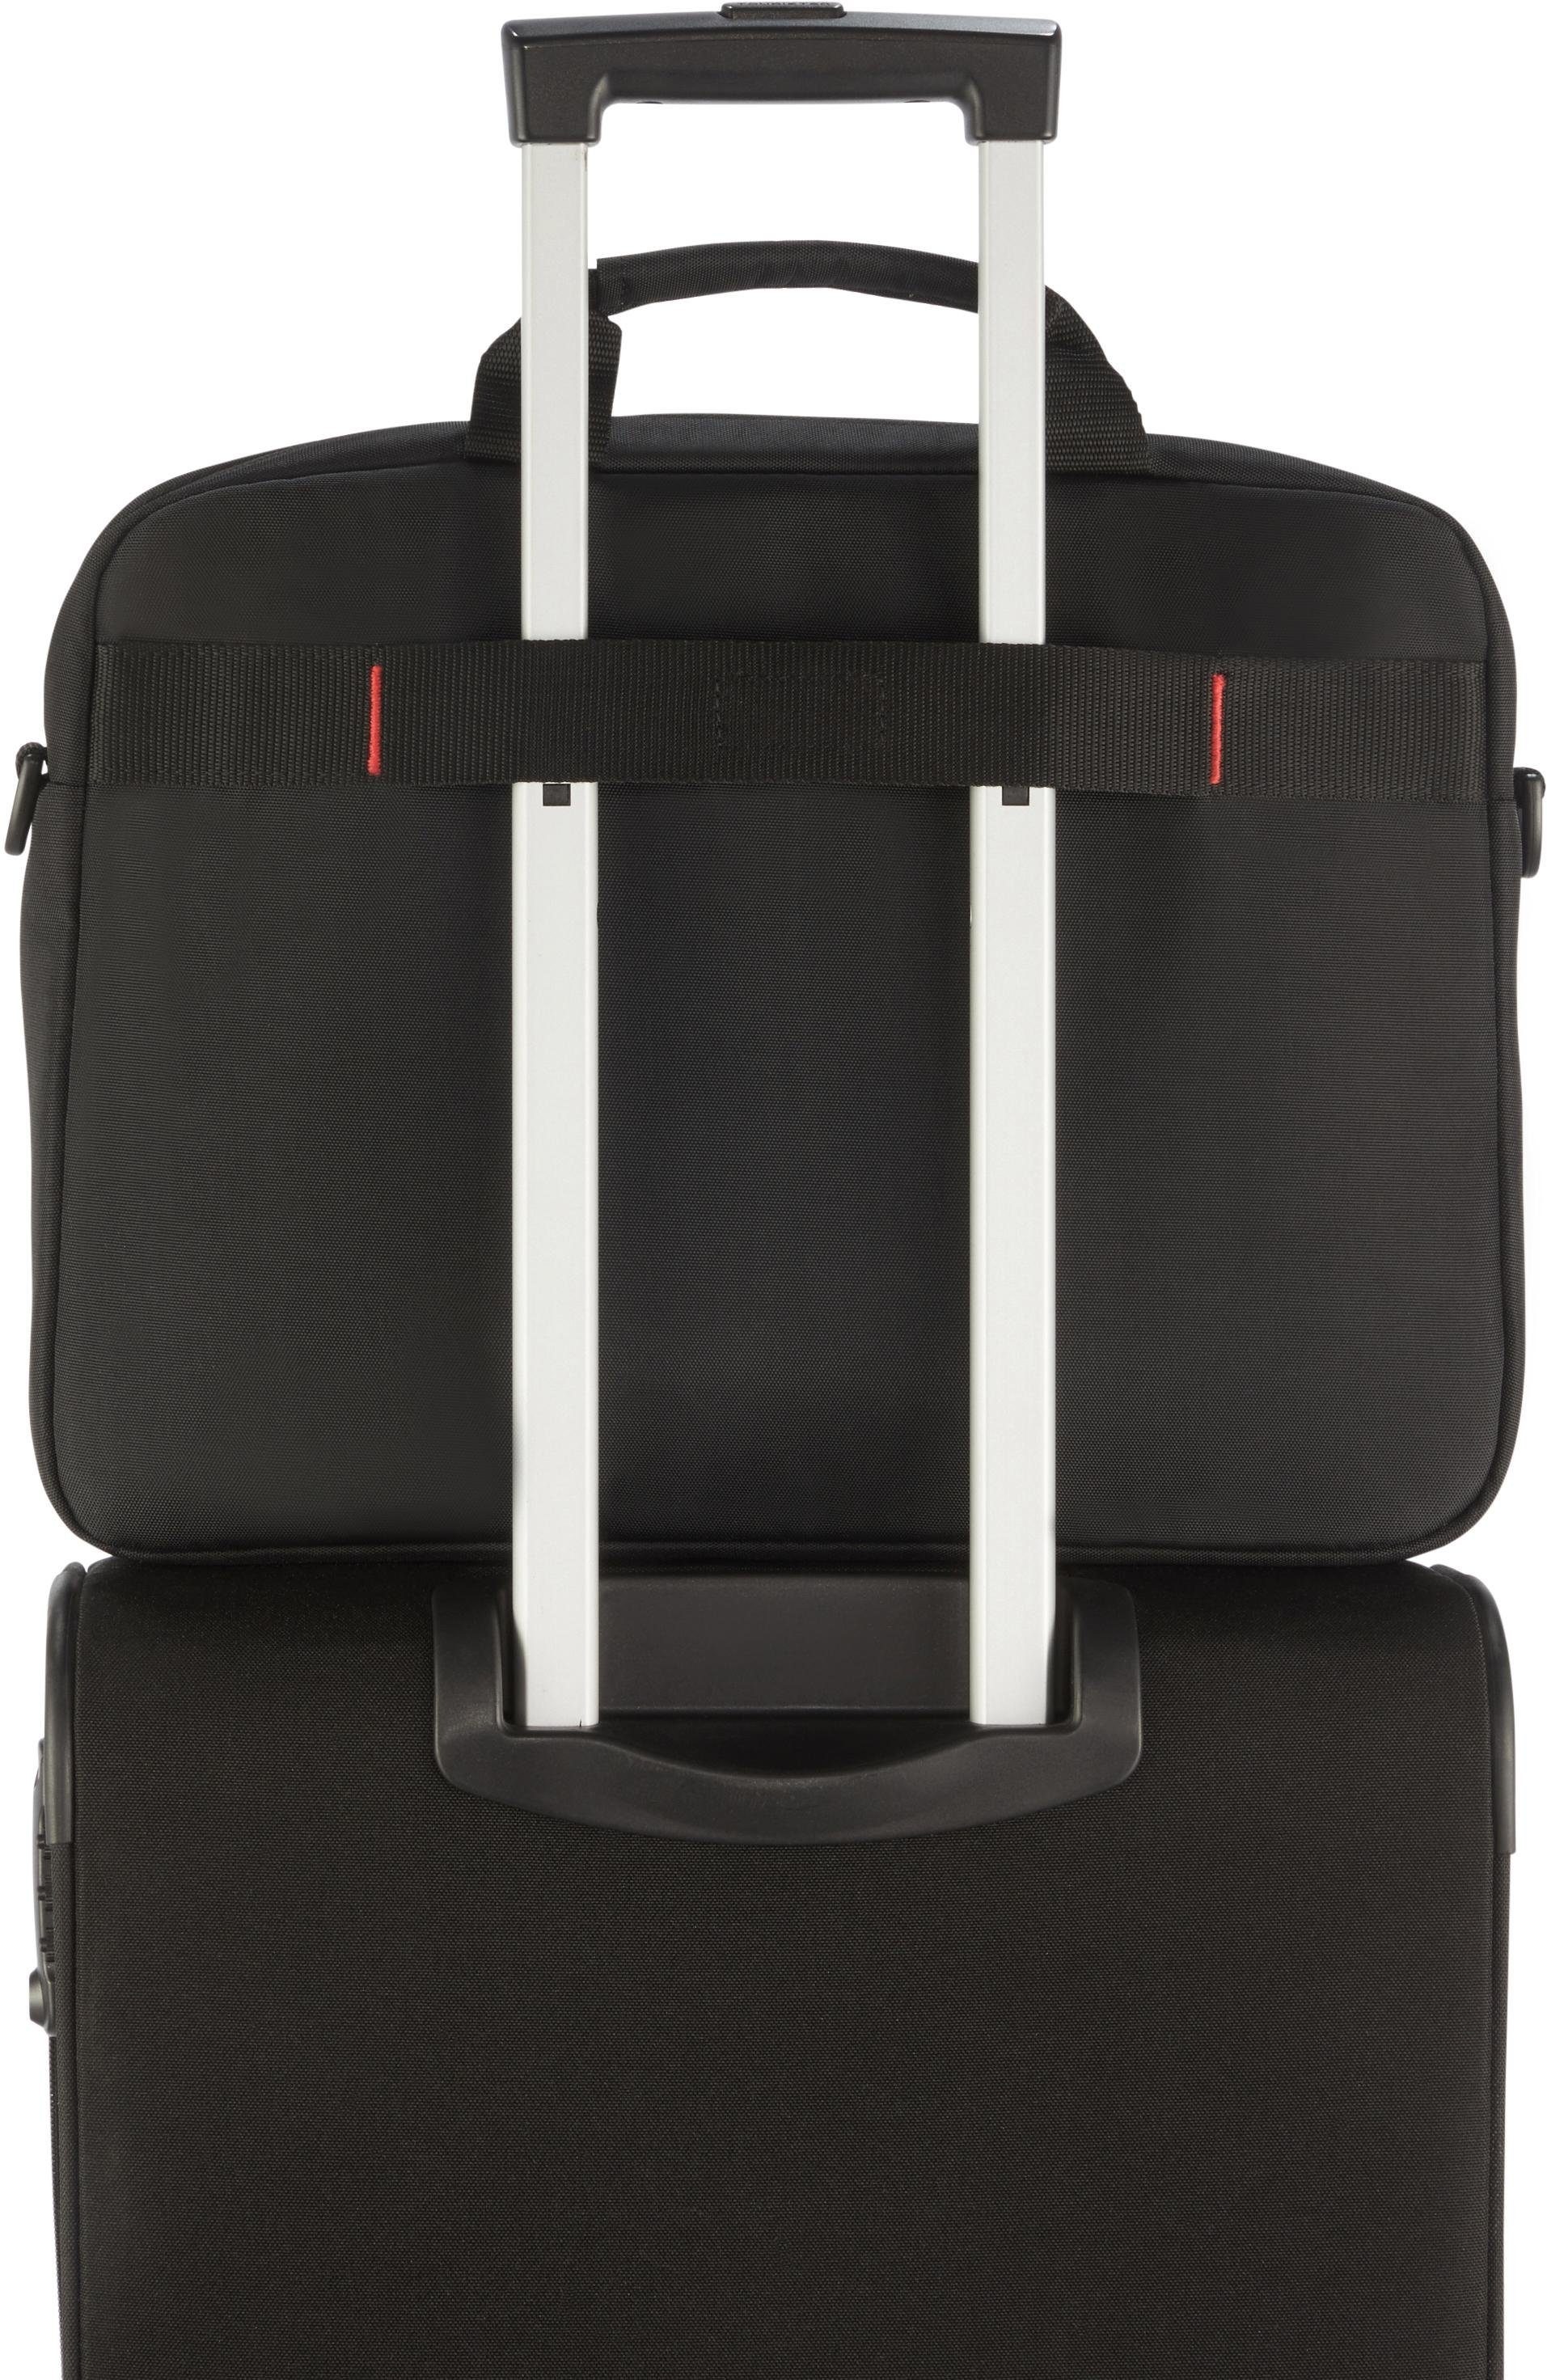 Samsonite Laptoptasche »Guardit 2.0, 15.6, black«, Laptop-Tragetasche Laptop-Case Laptop-Bag mit 15,6 Zoll Laptopfach